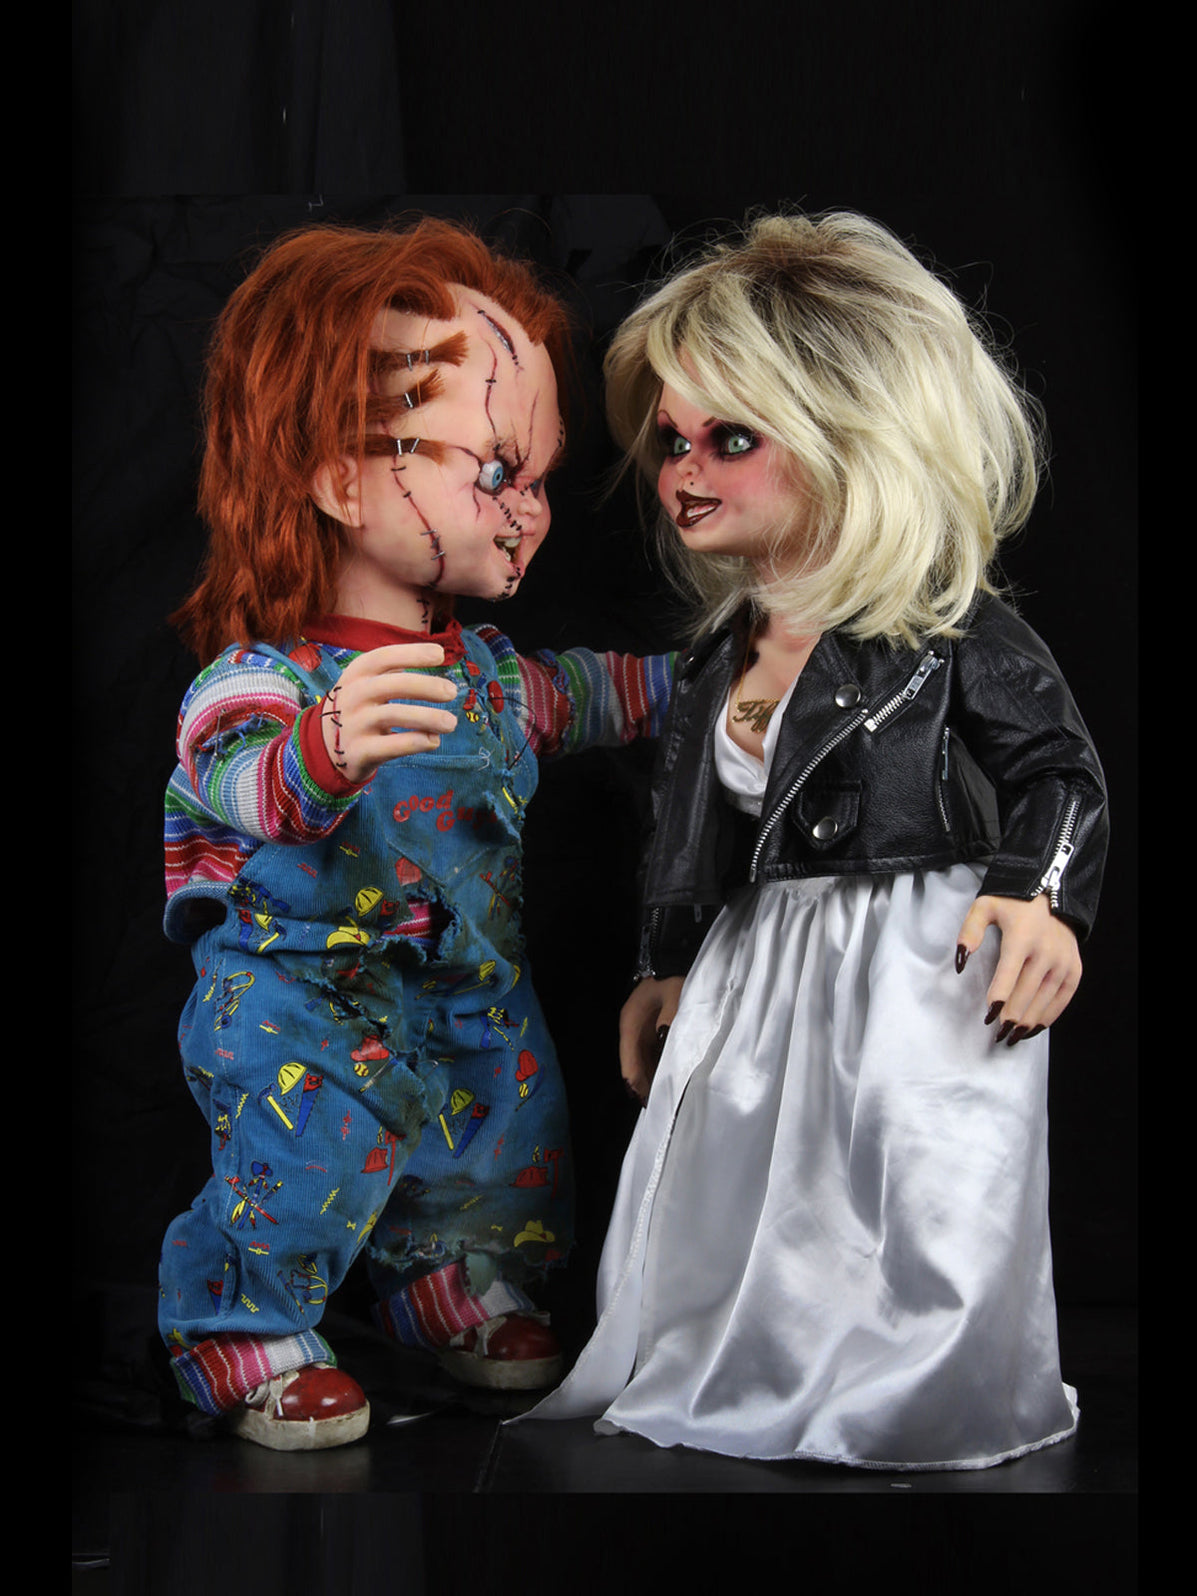 Tiffany Lifesize Replica Doll Bride of Chucky Figurine NECA ...